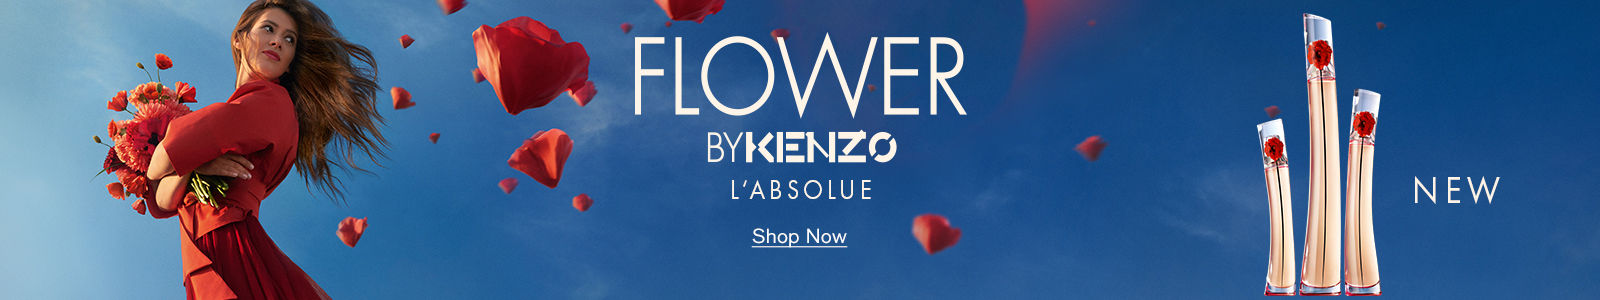 New Flower ByKenzo L’Absolue, Shop Now